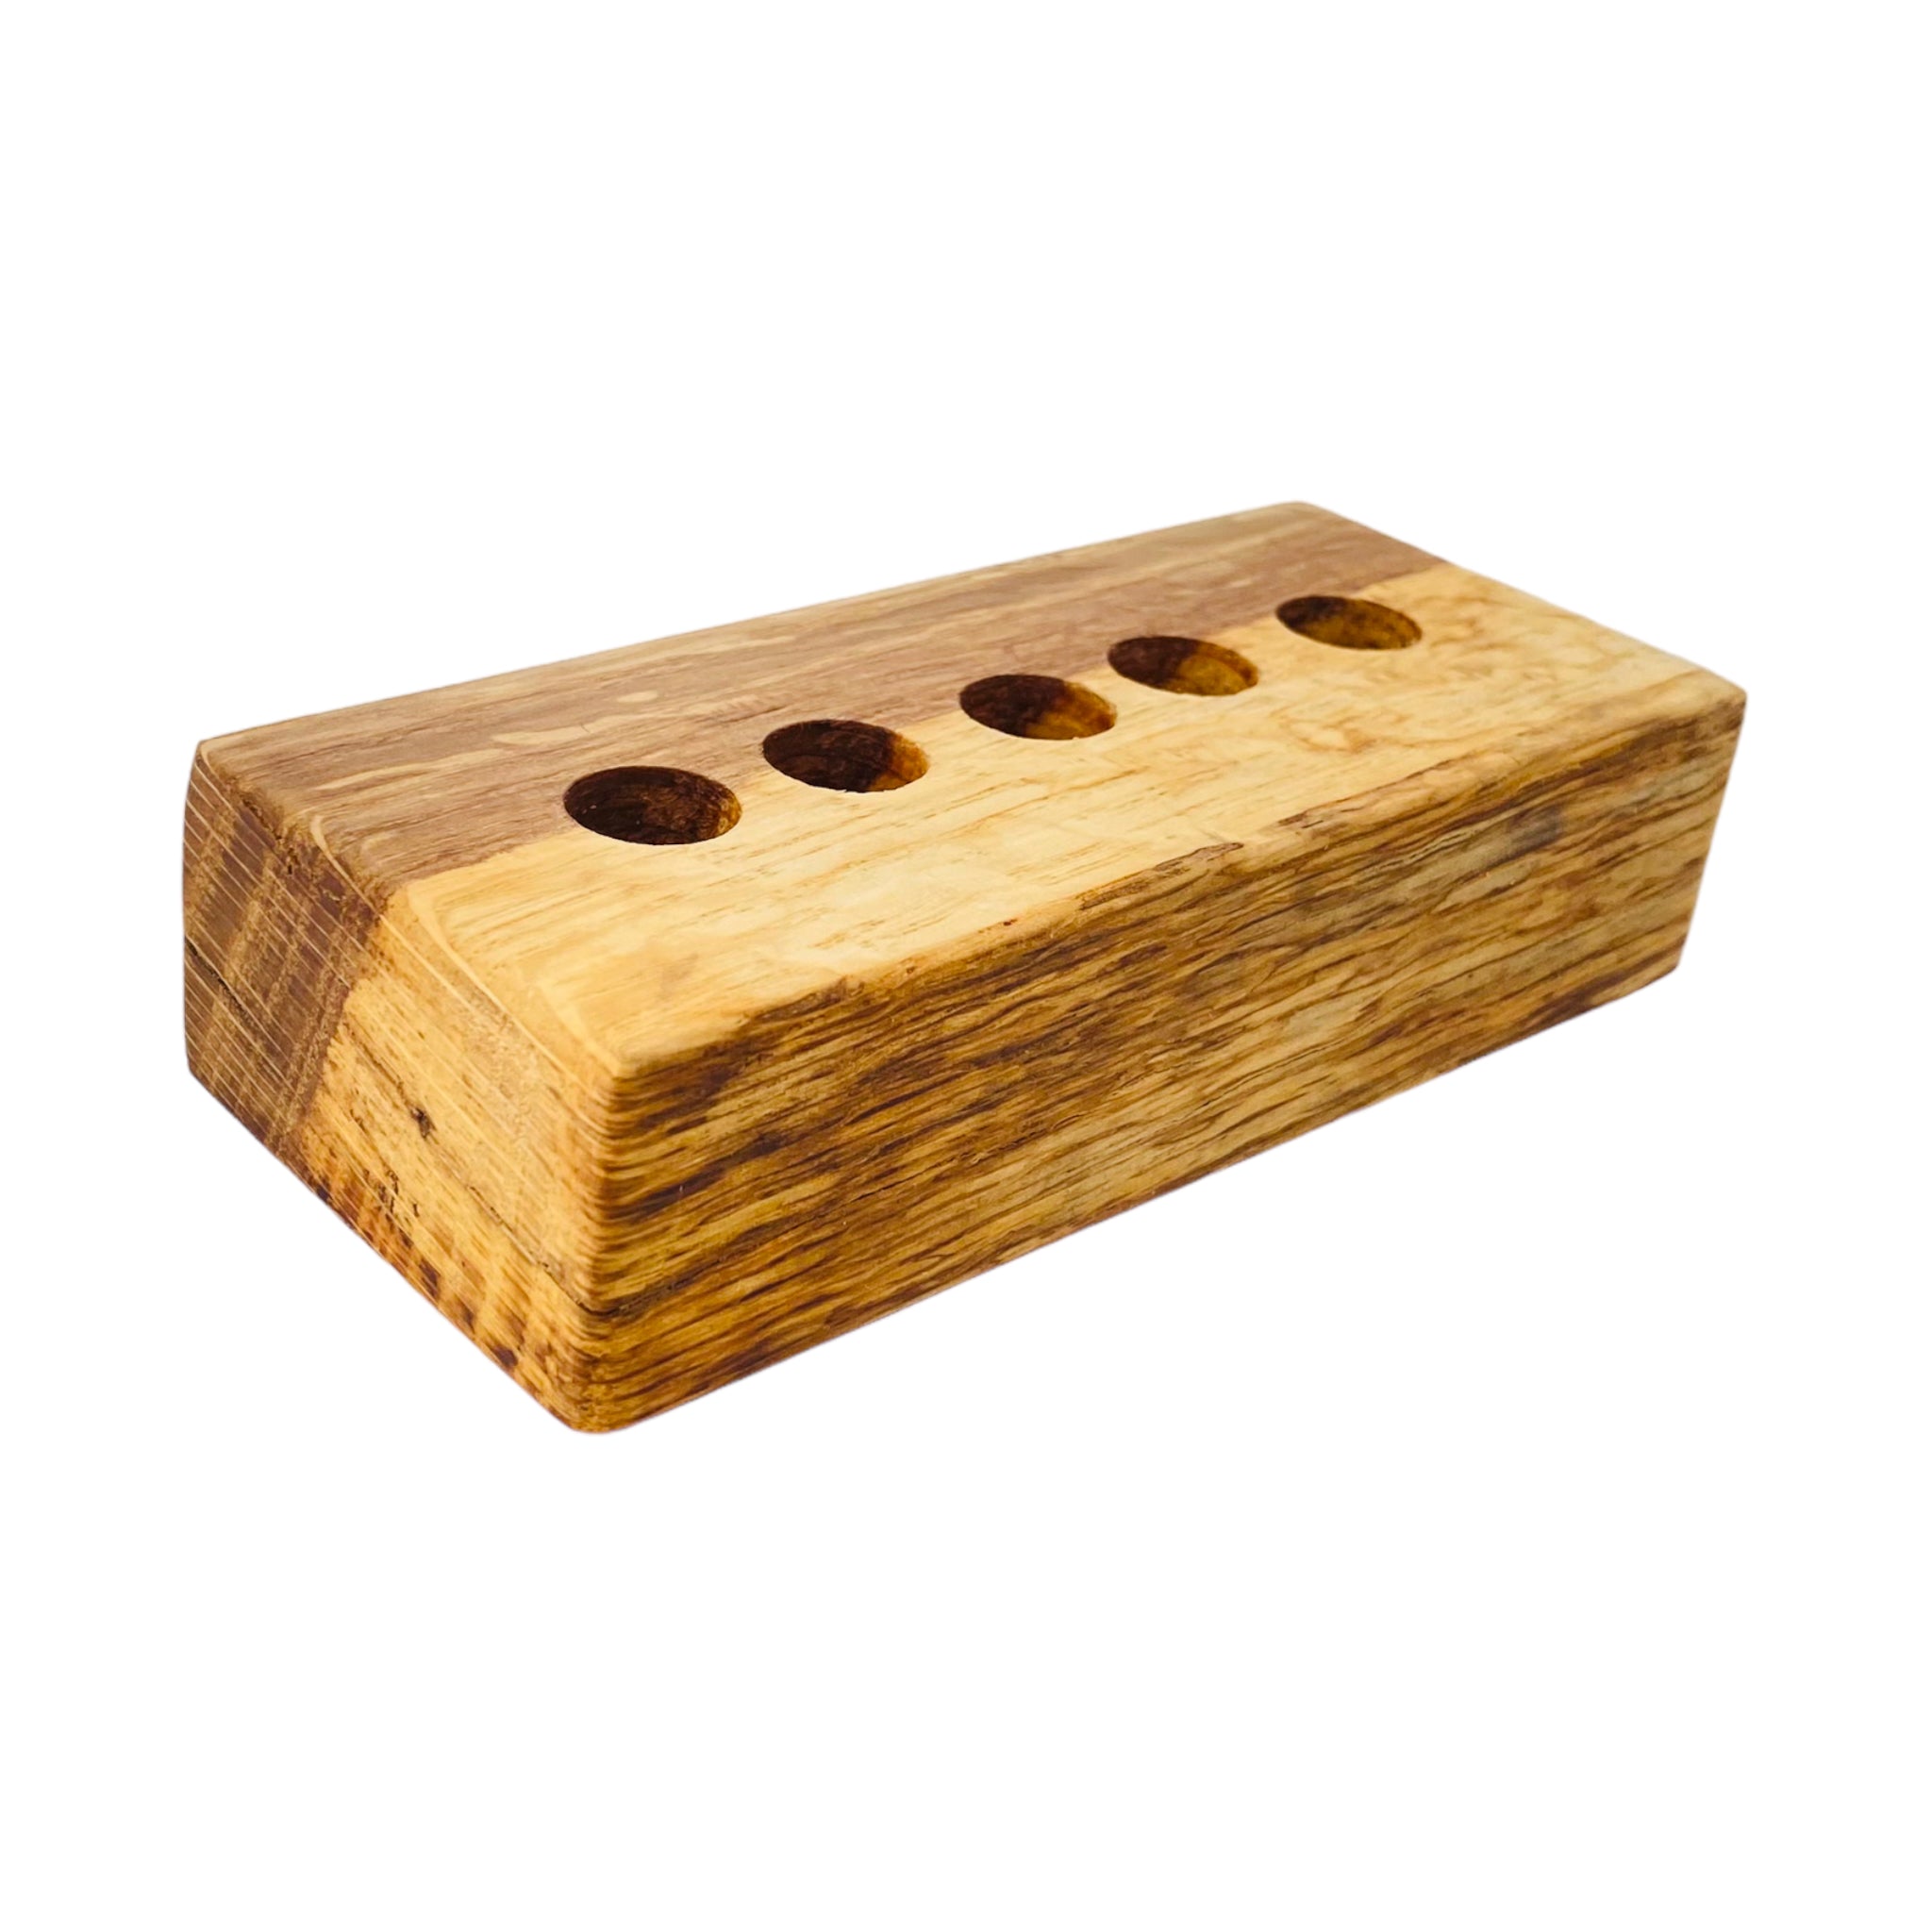 5 Hole Wood Display Stand Holder For 14mm Bong Bowl Pieces Or Quartz Bangers - Cork Oak